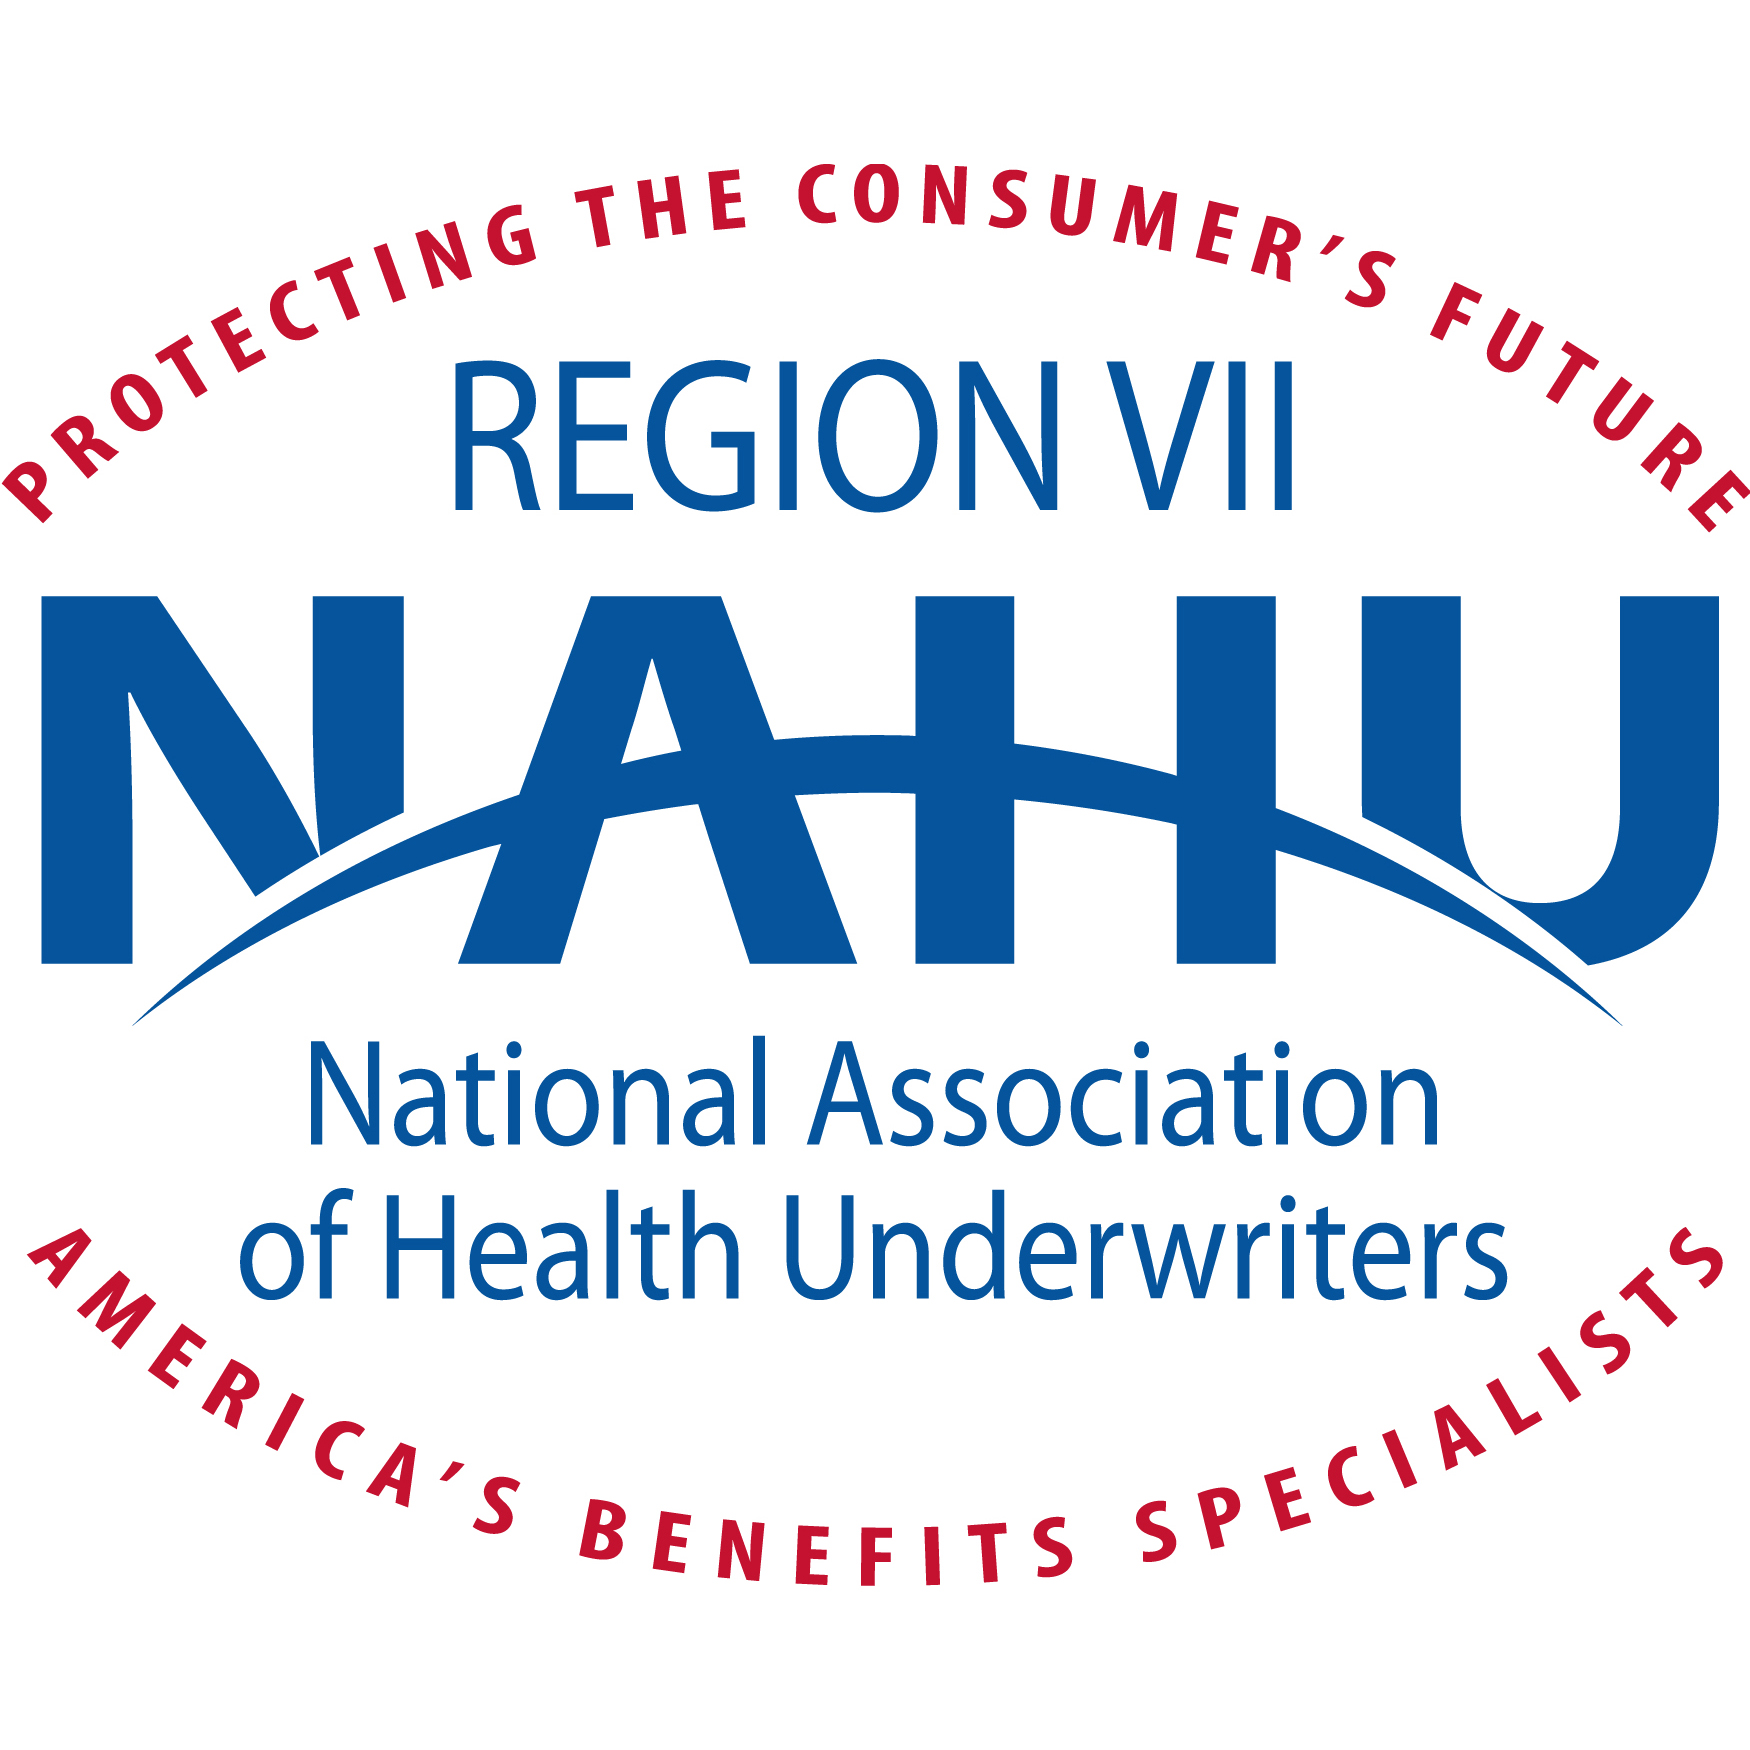 NAHU Logo Region VII Square